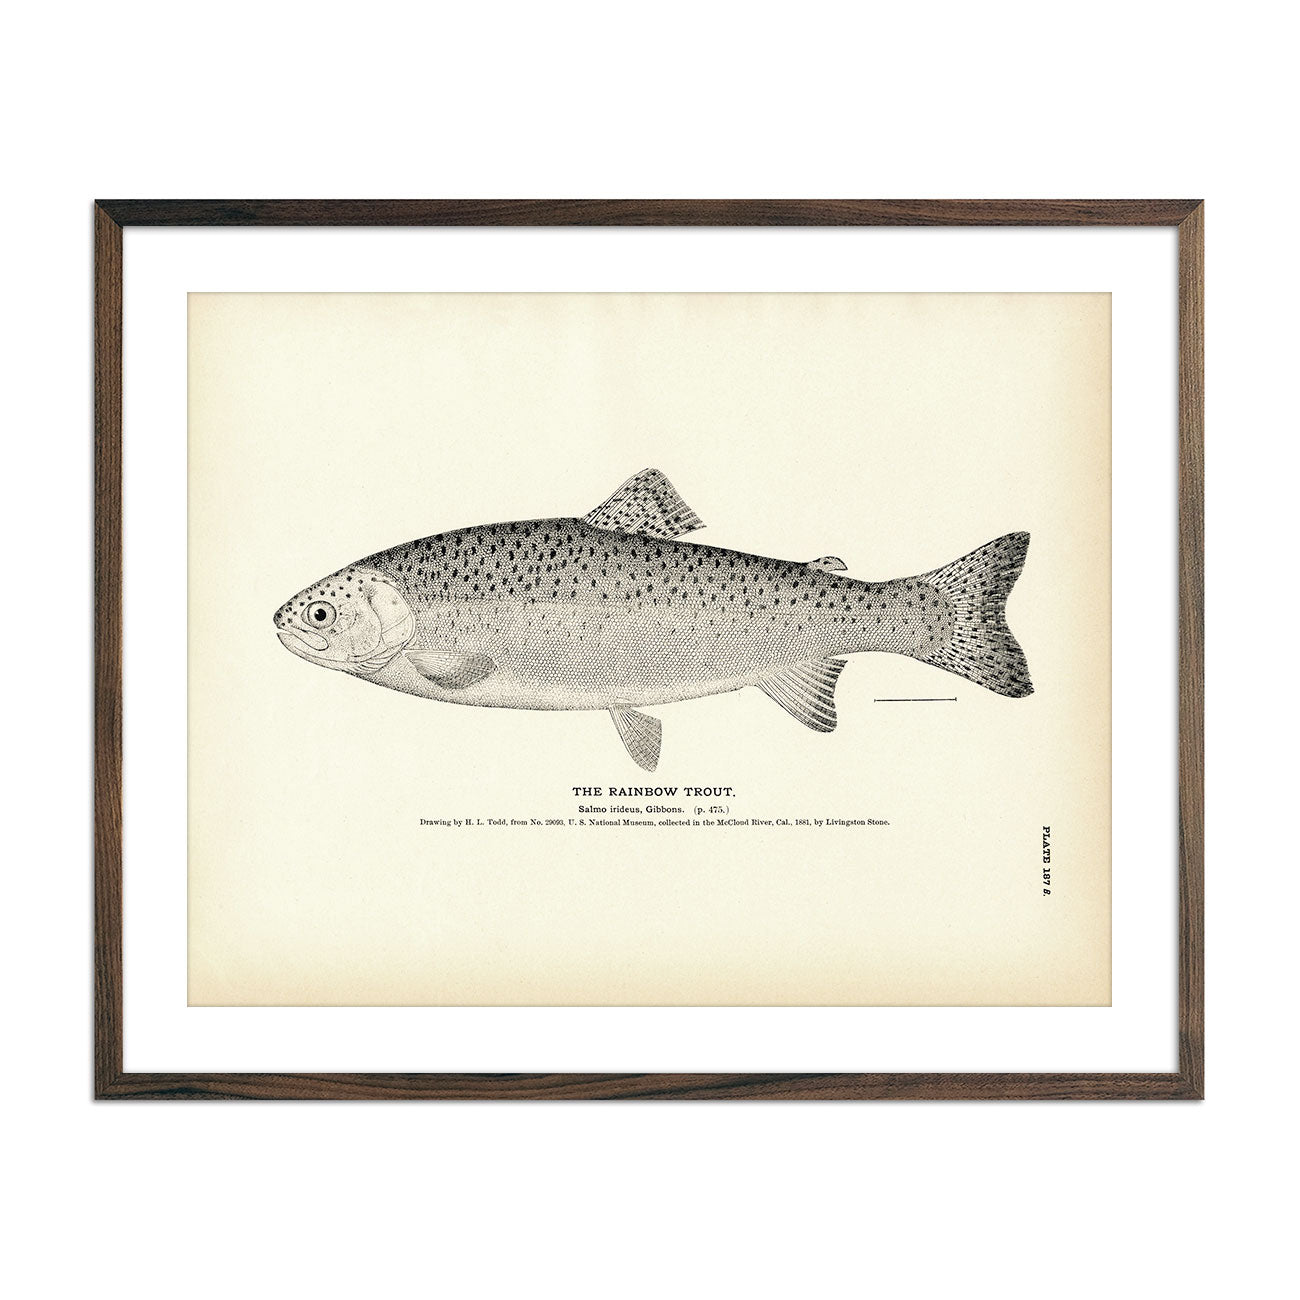 Striped Bass (Rockfish) - 1884 Print